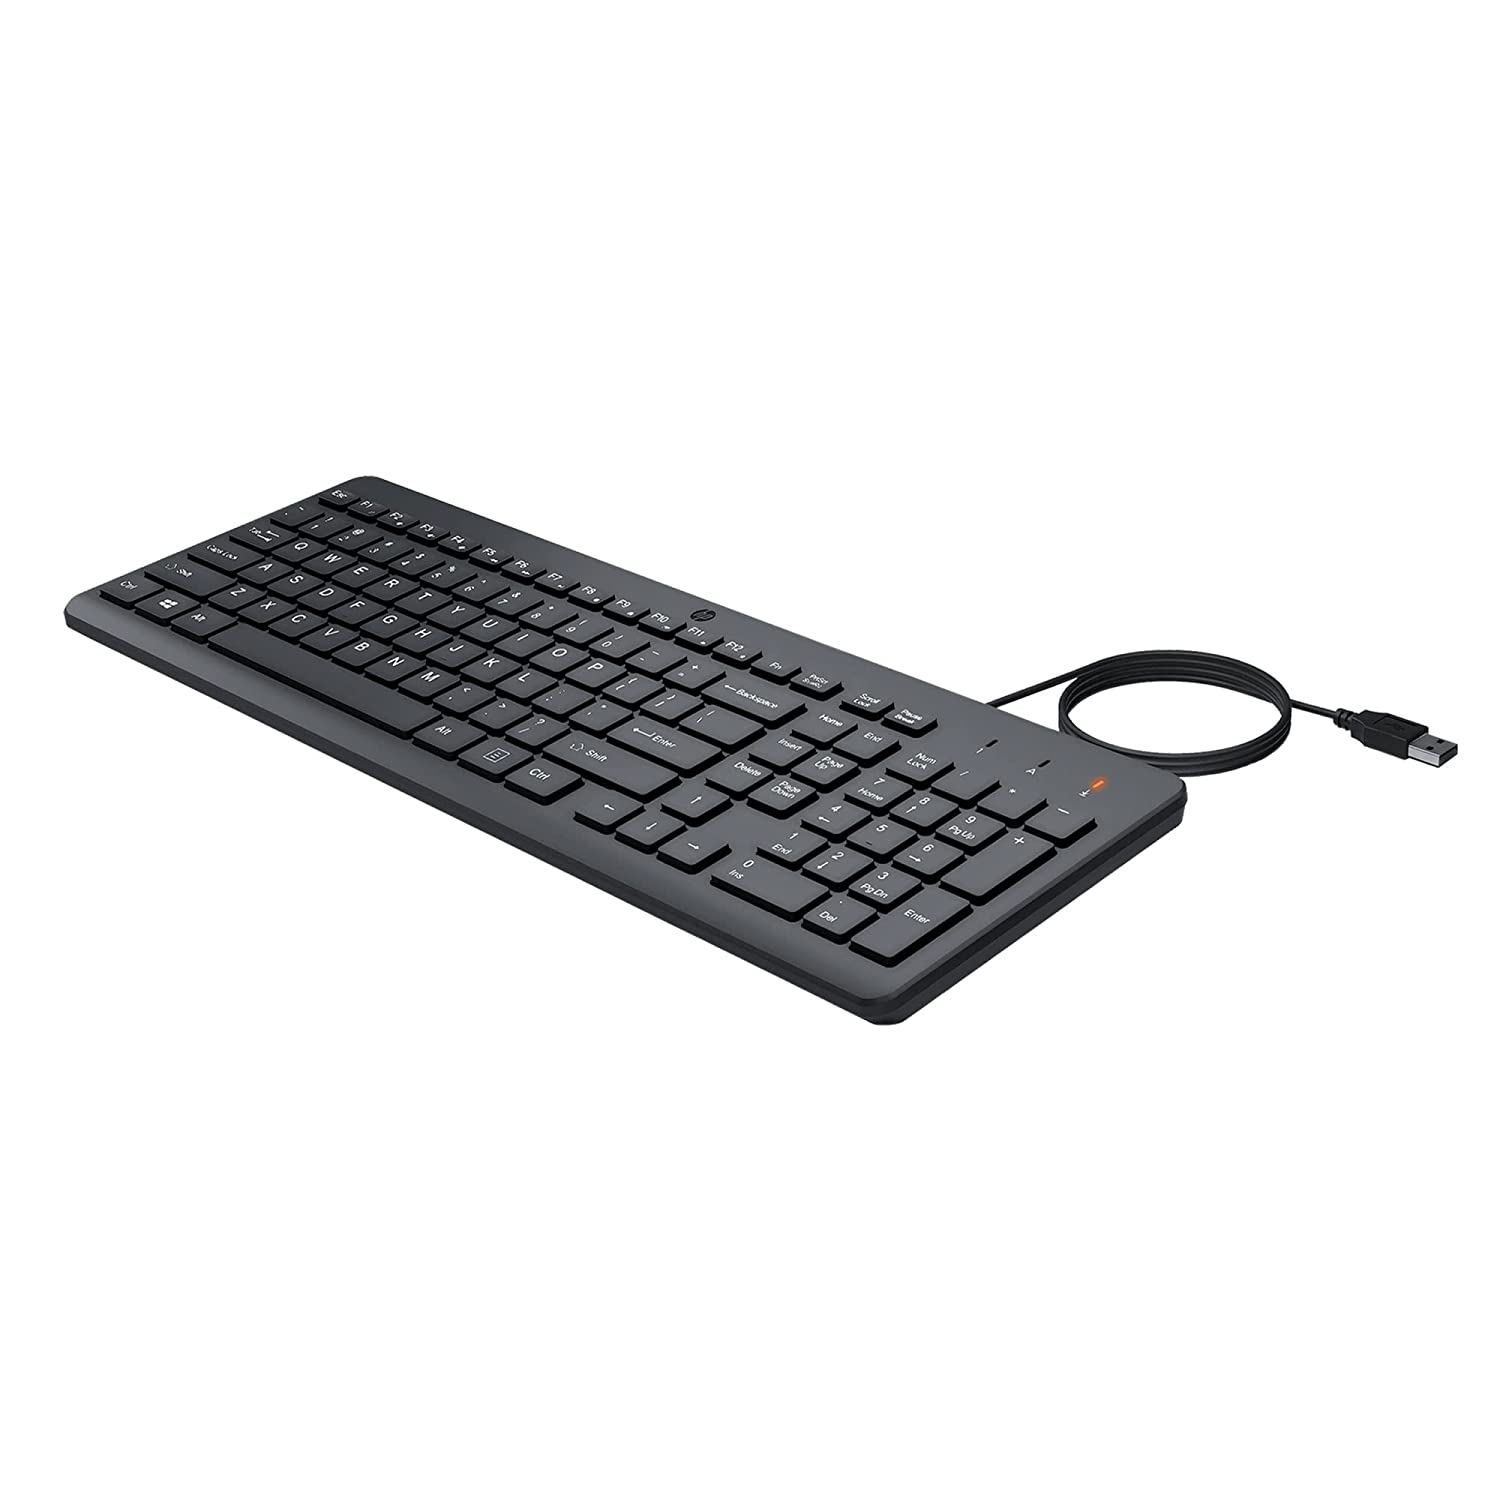 Keyboard All Types - HP 150 Wired Keyboard, Quick, 12Fn Shortcut Keys, USB